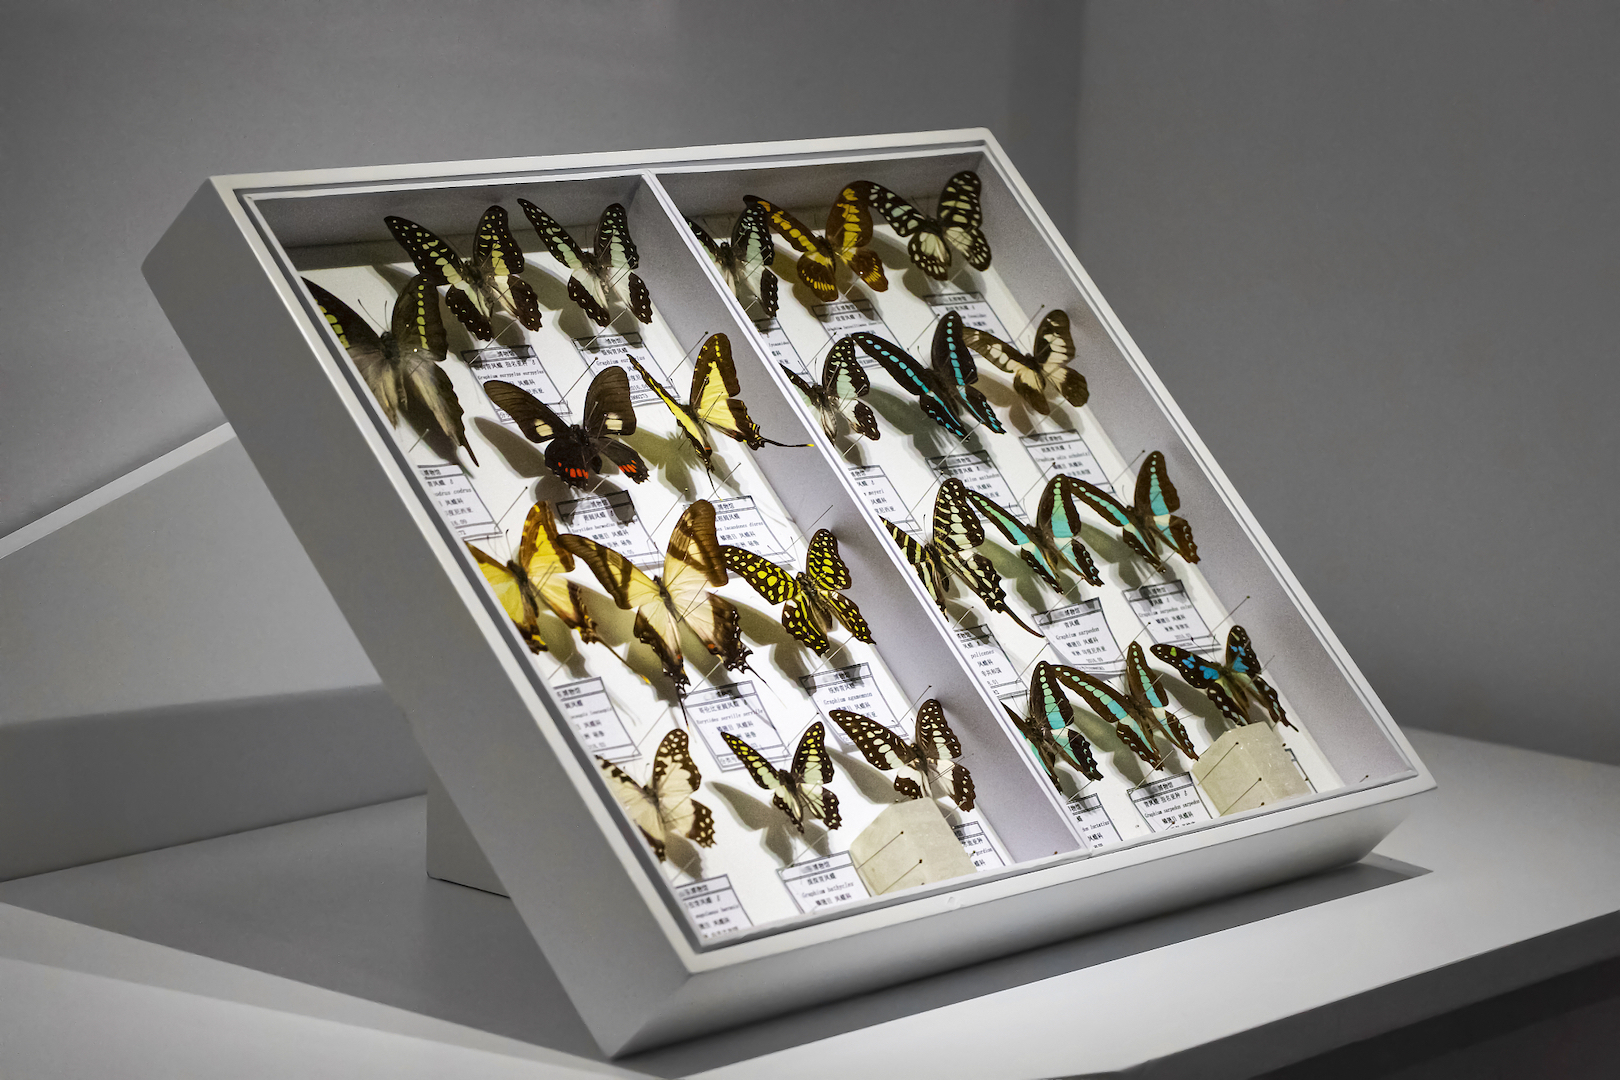 Butterfly specimens. /CFP